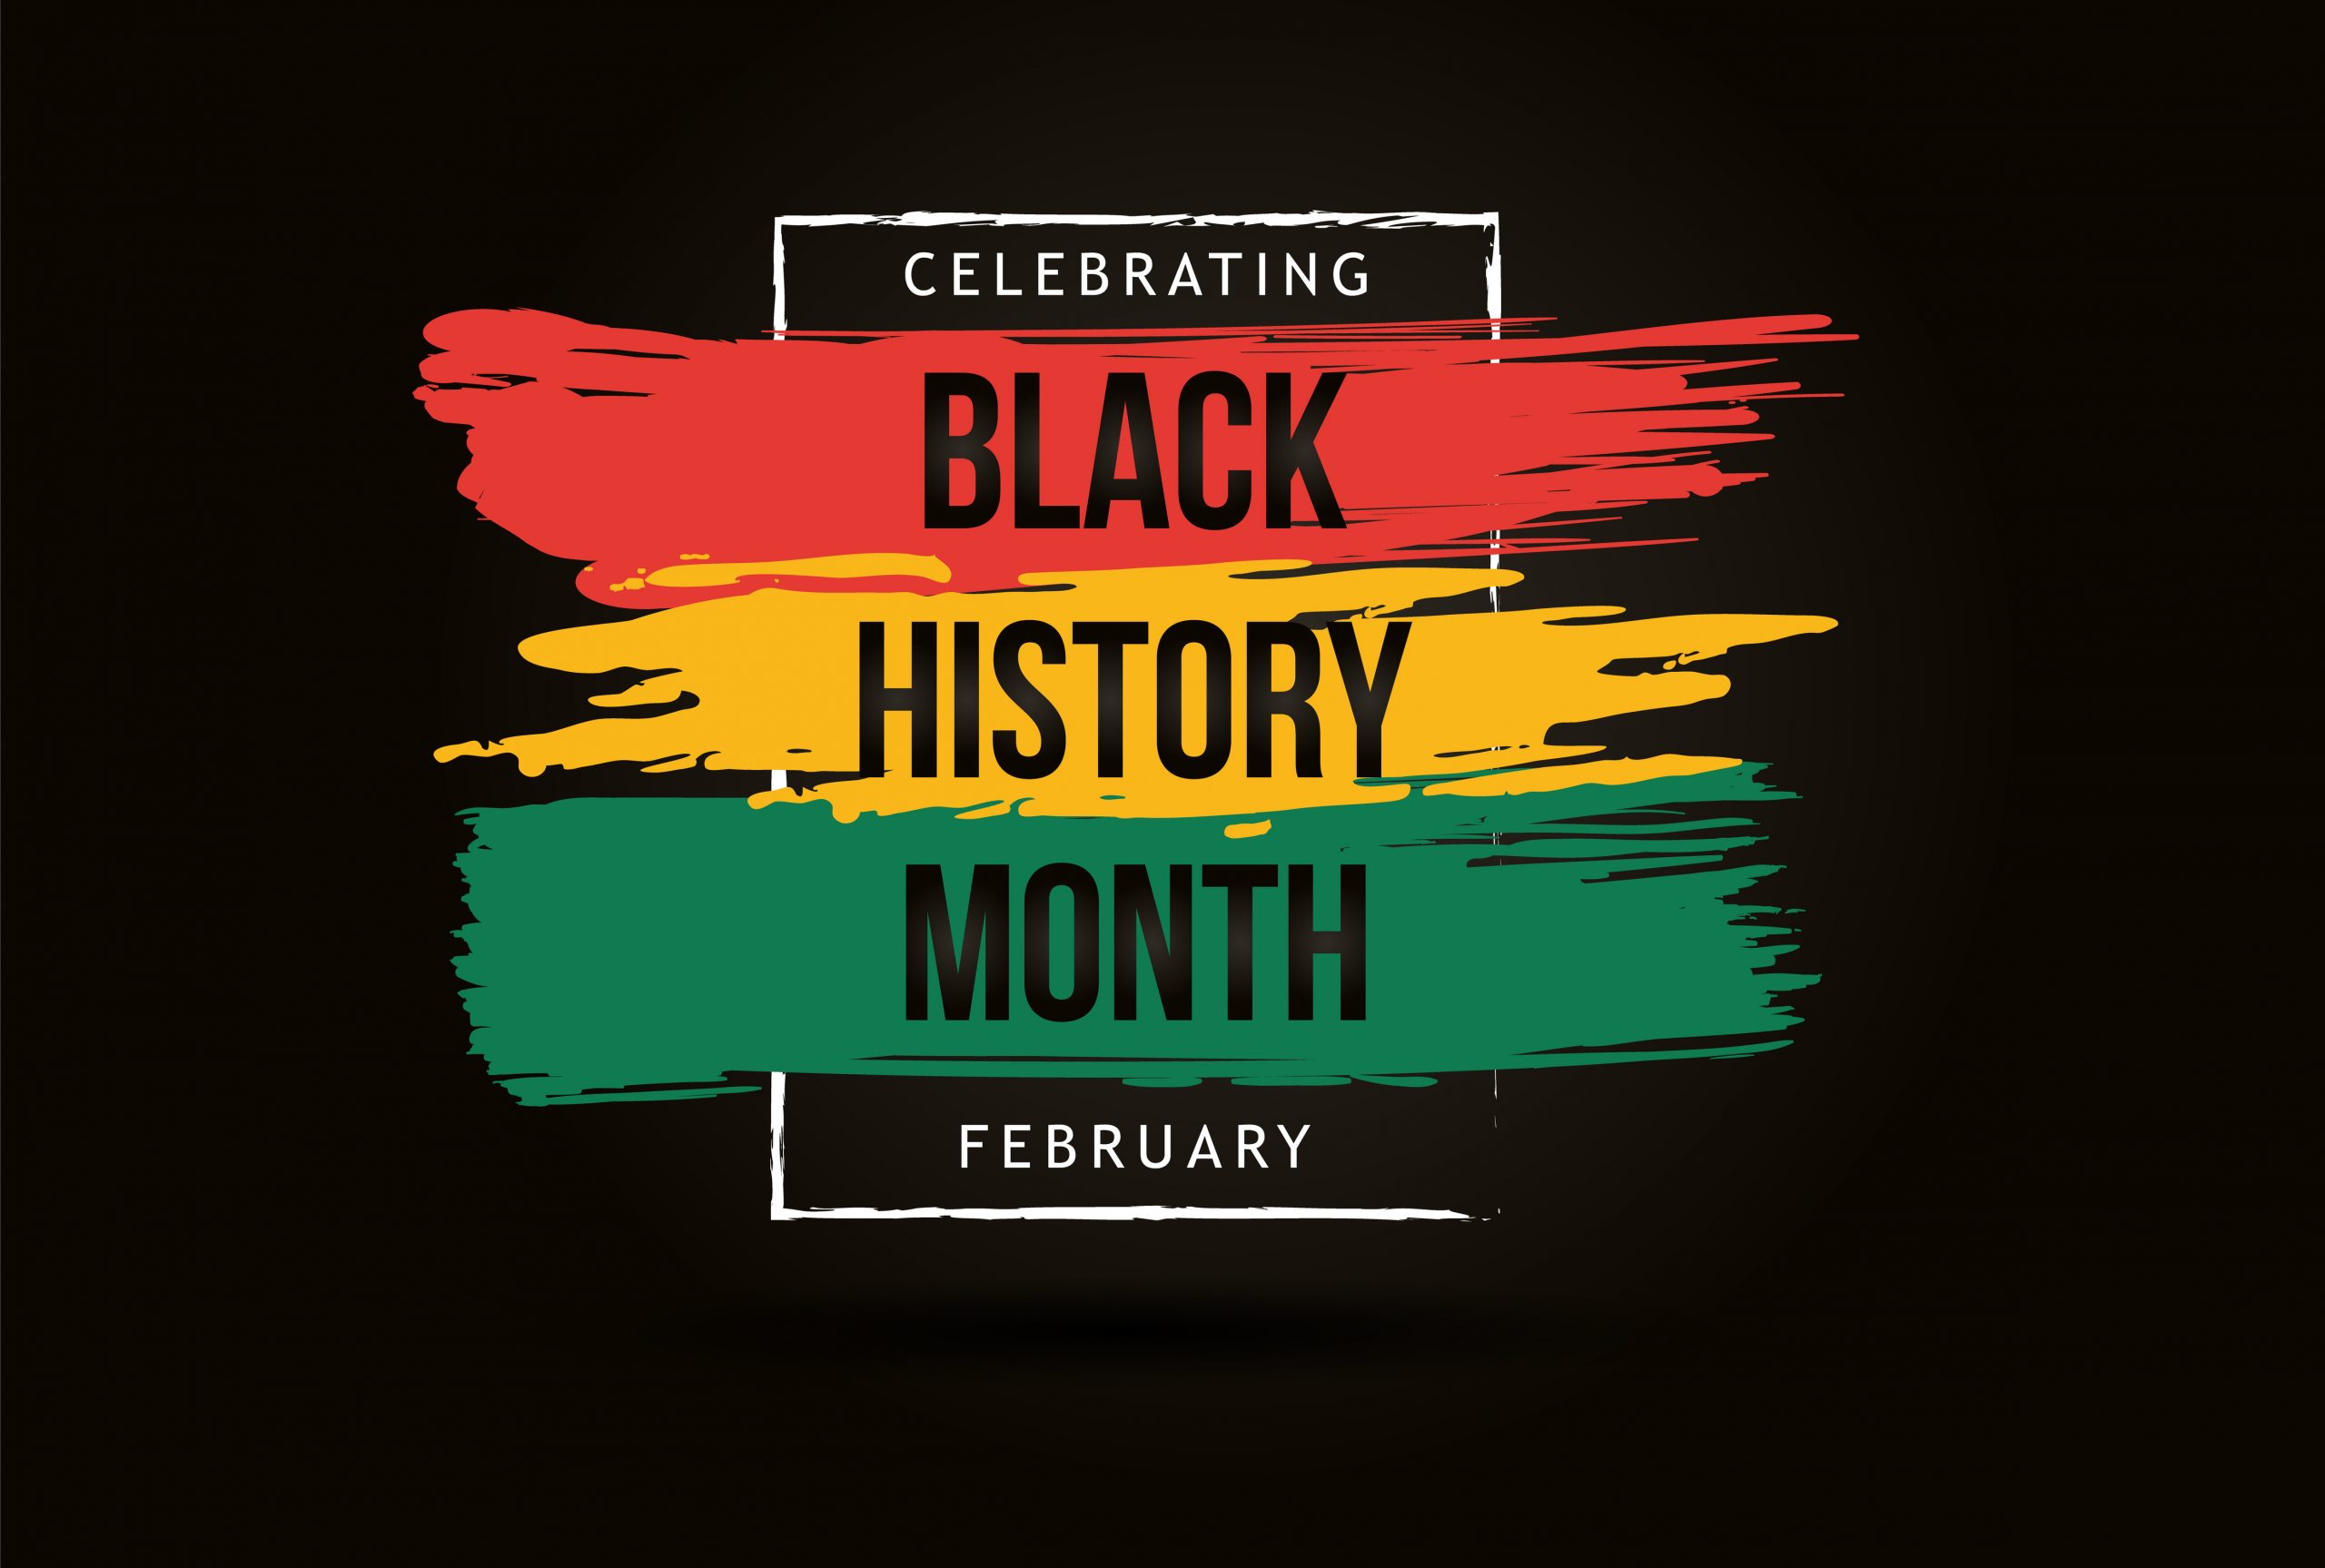 How Fairfax is Celebrating Black History Month Through Art